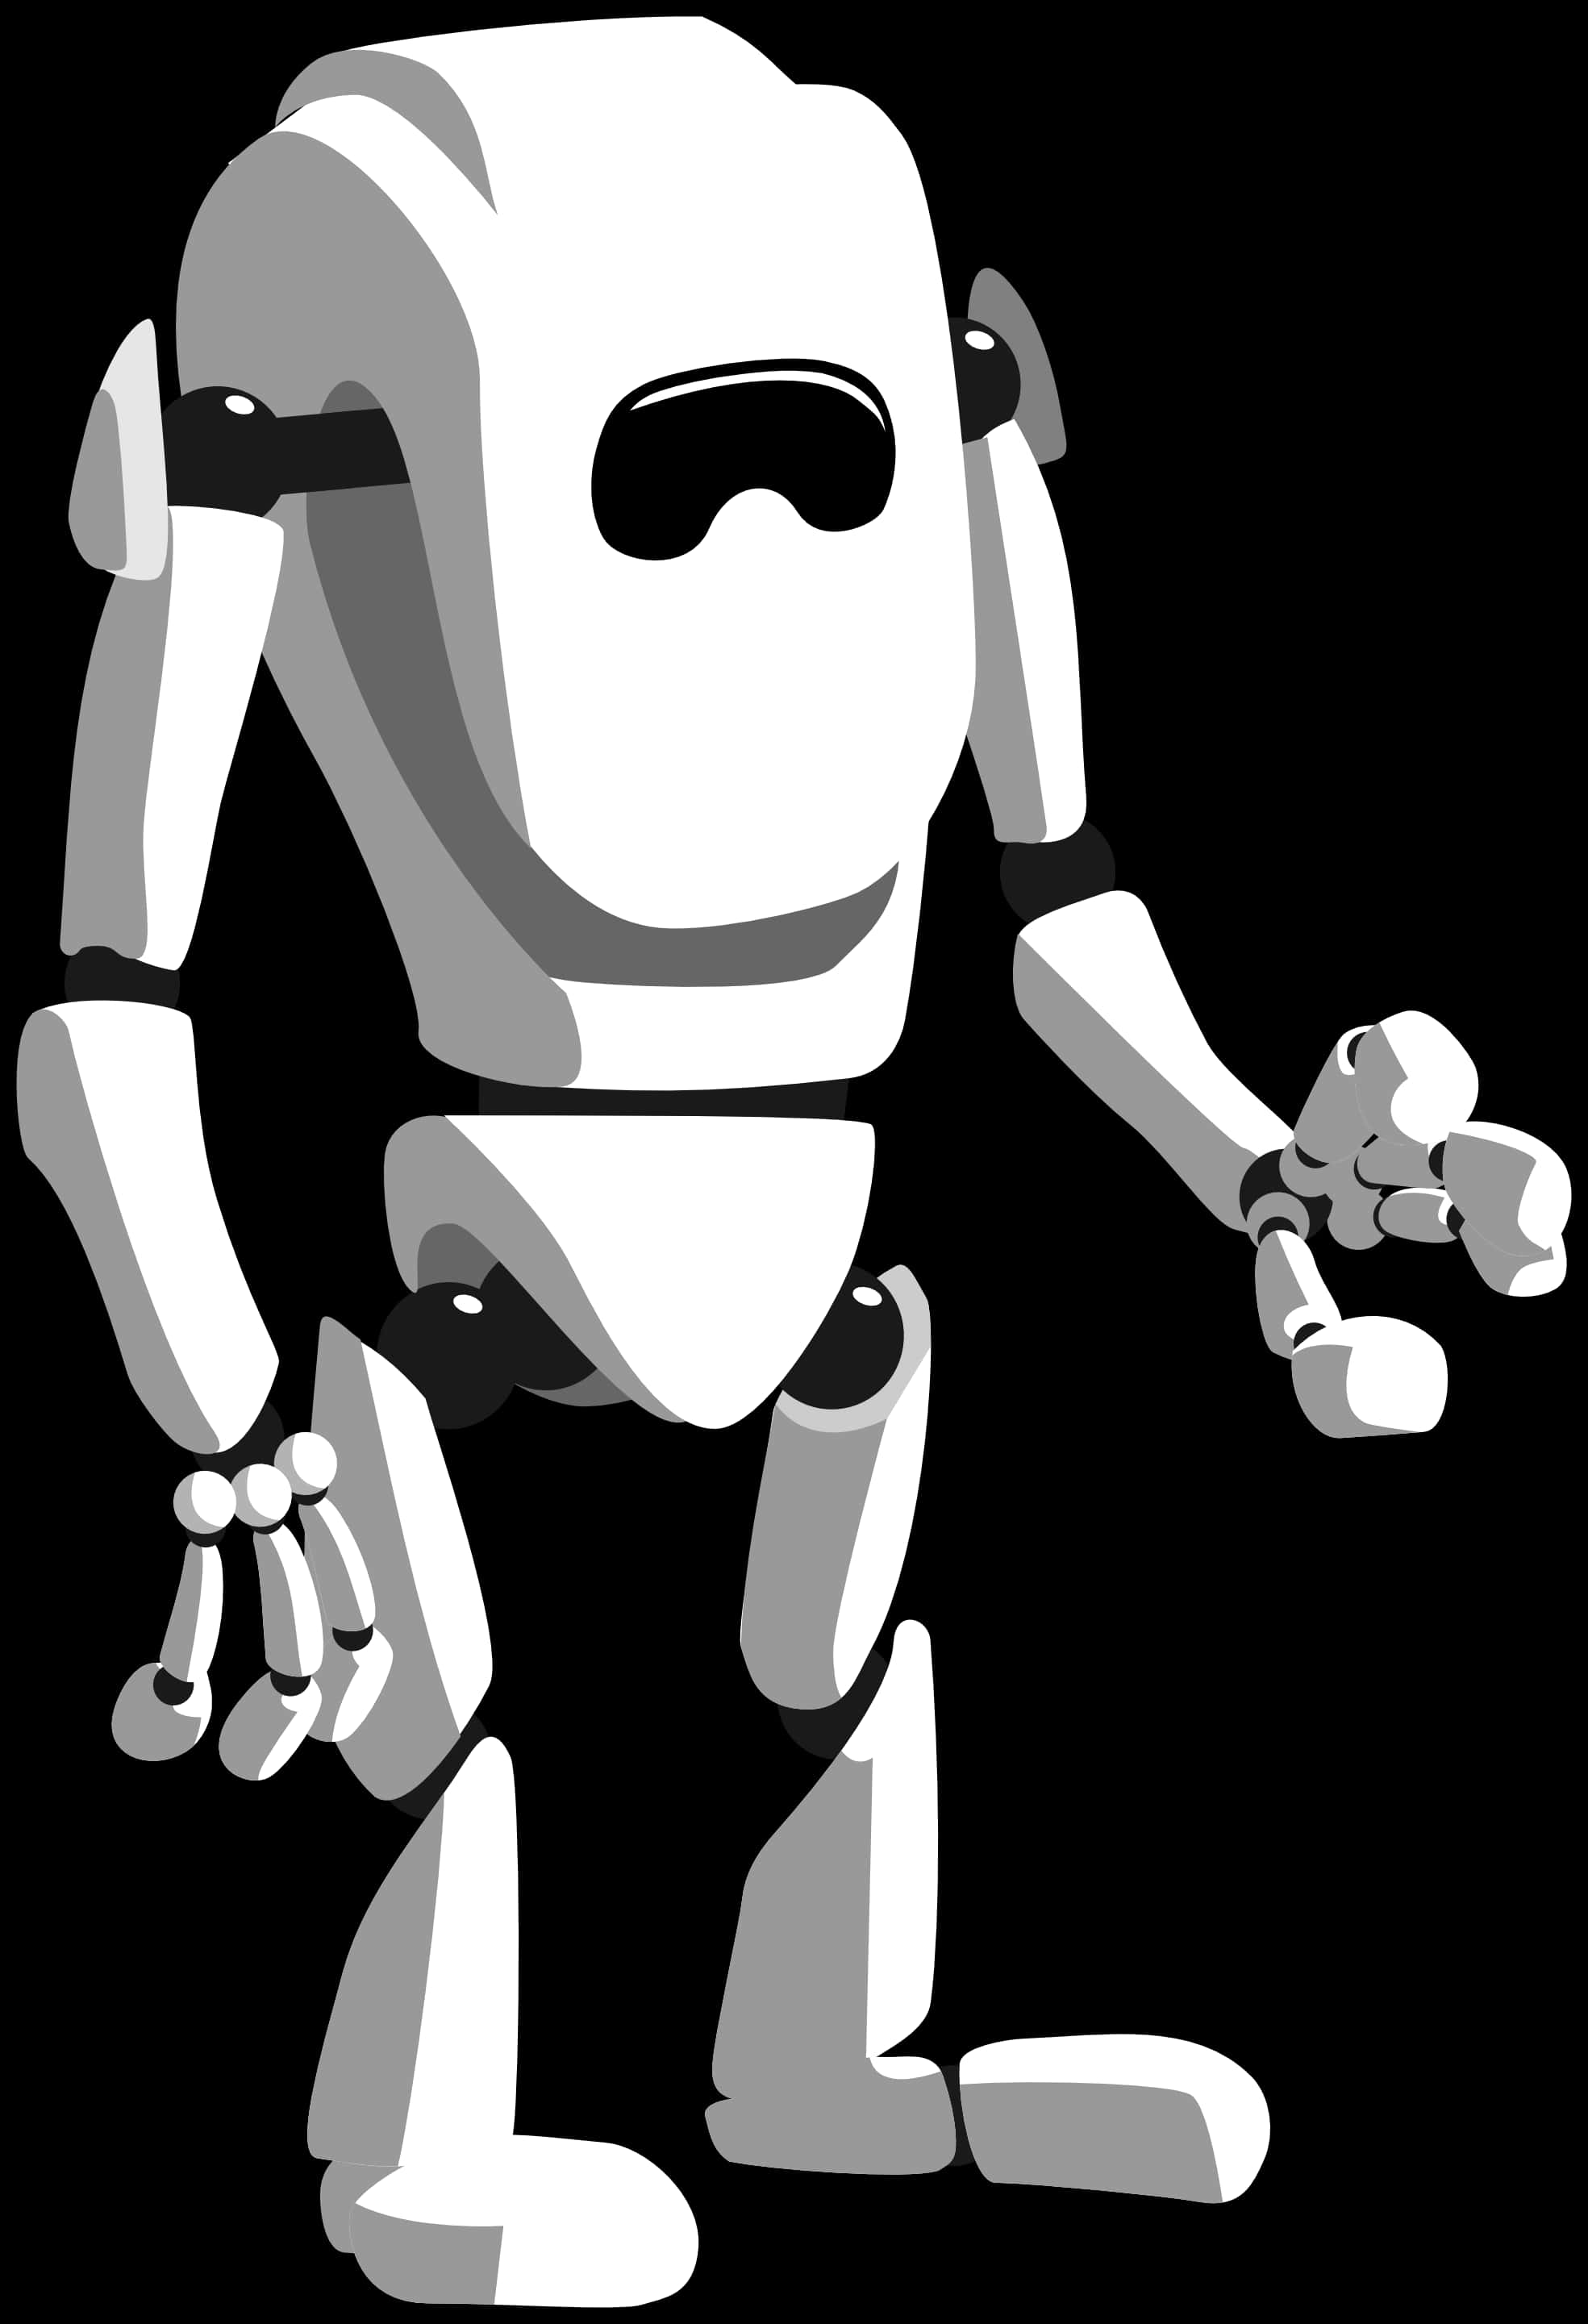 Monochrome Robot Illustration